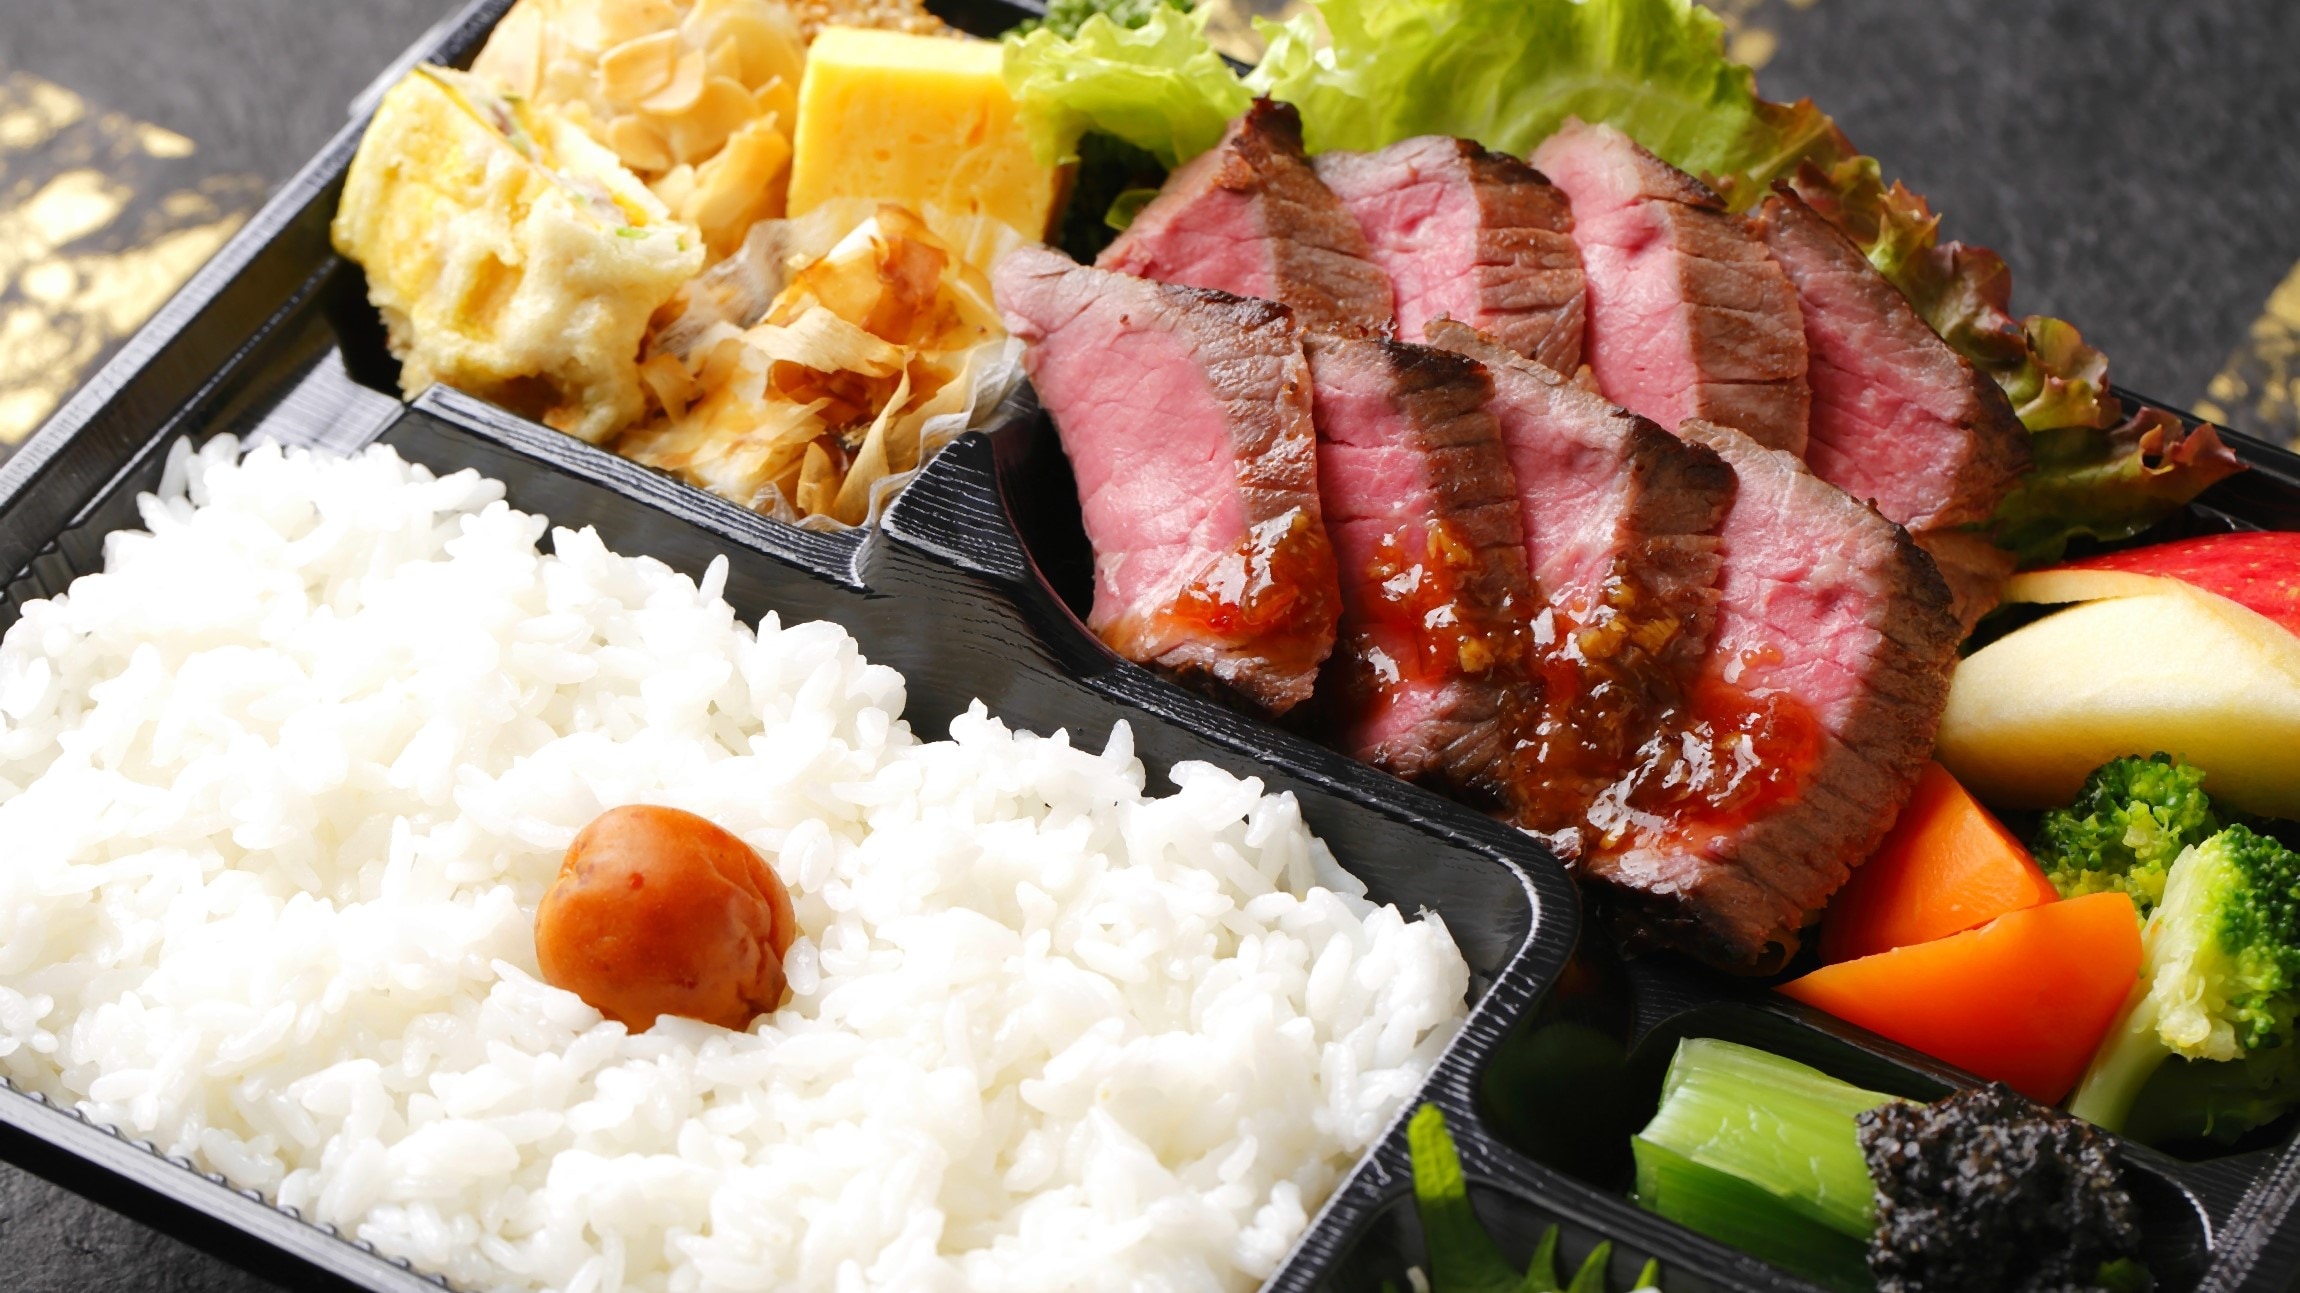 ◆ Black beef steak lunch (example)